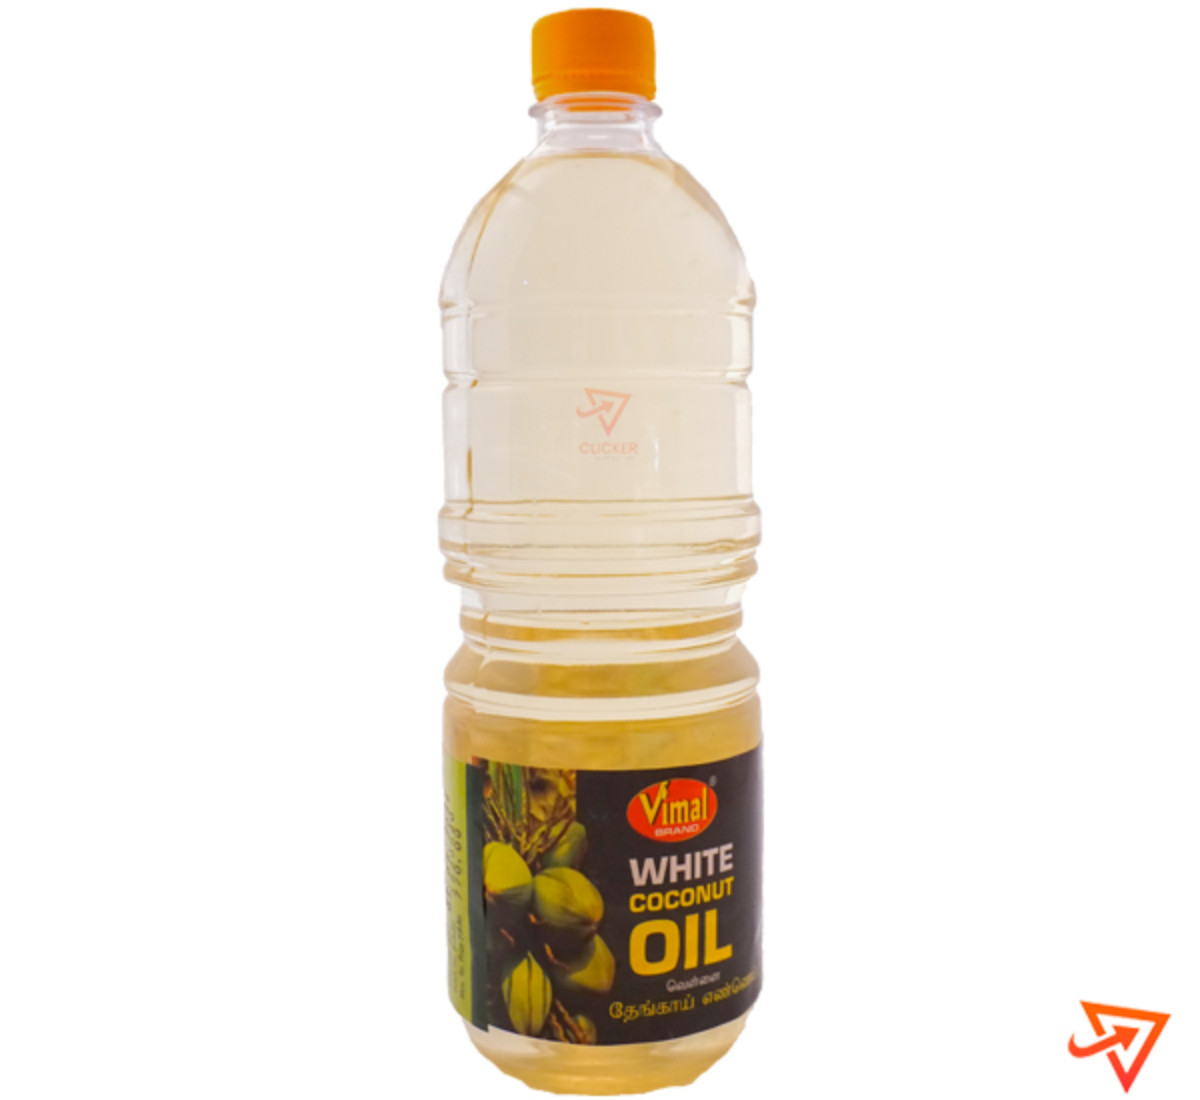 Clicker product 500ml VIMAL white coconut oil 889